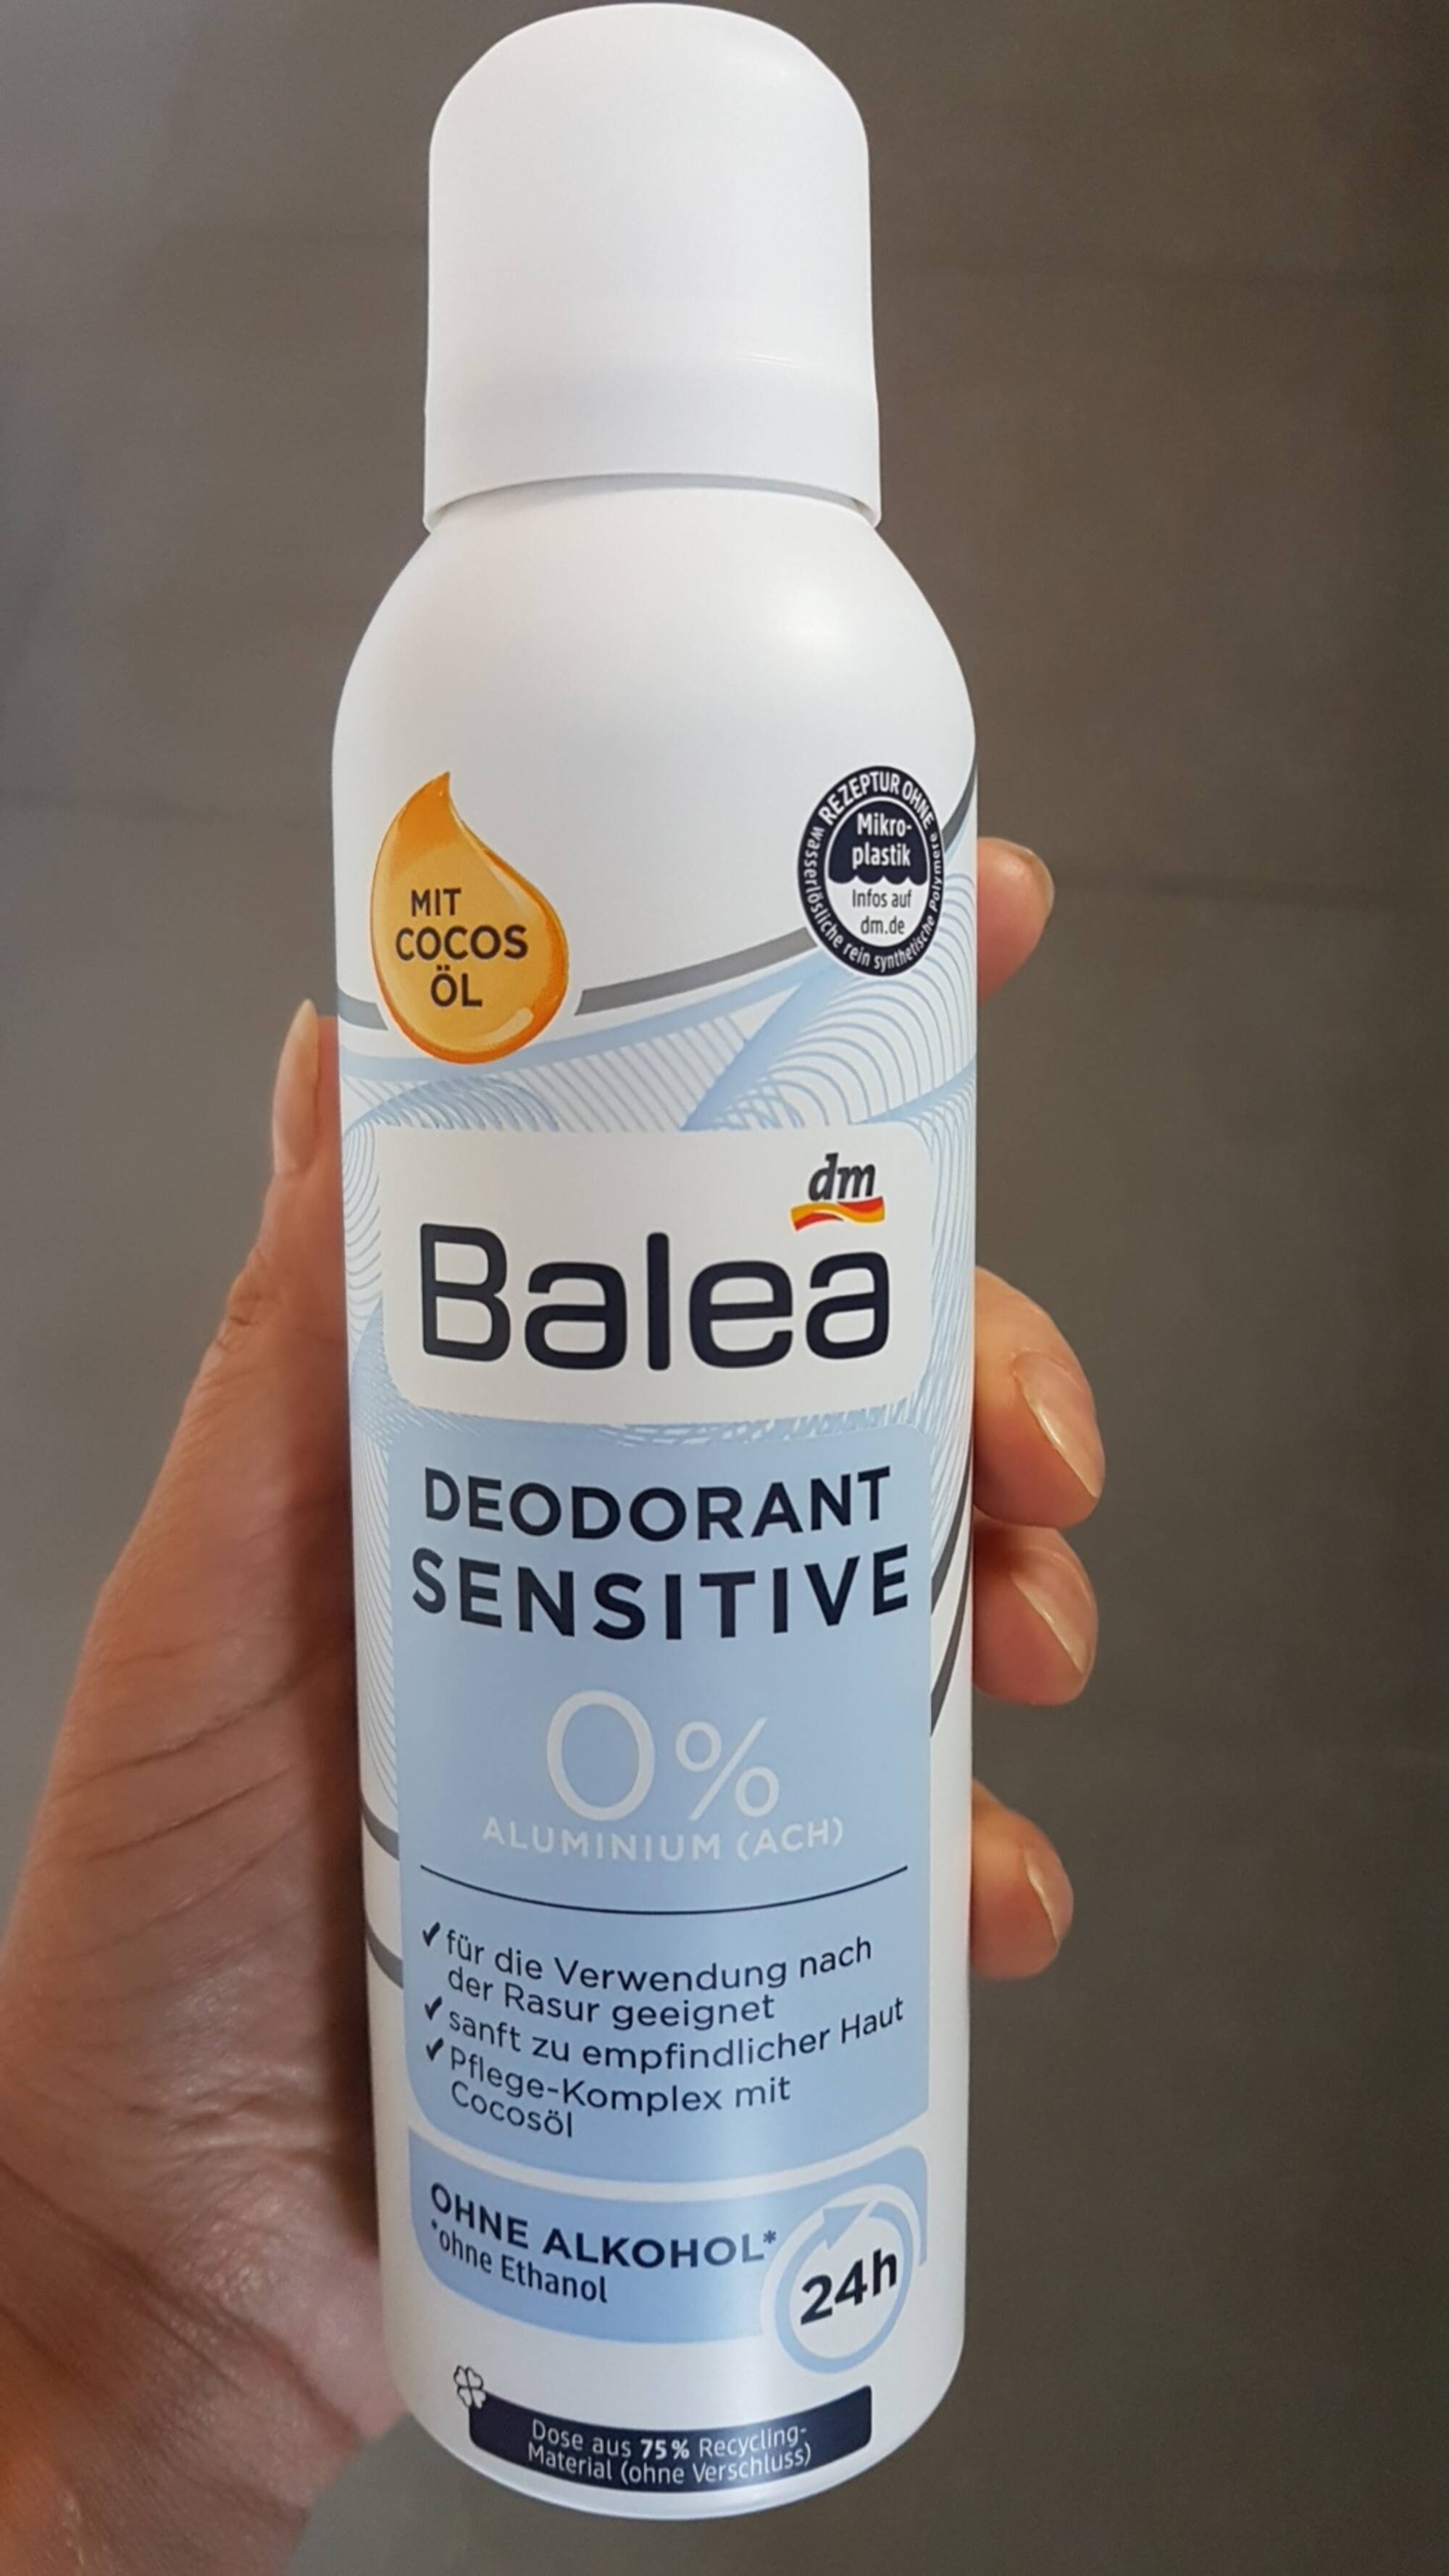 BALEA - Deodorant sensitive 24h